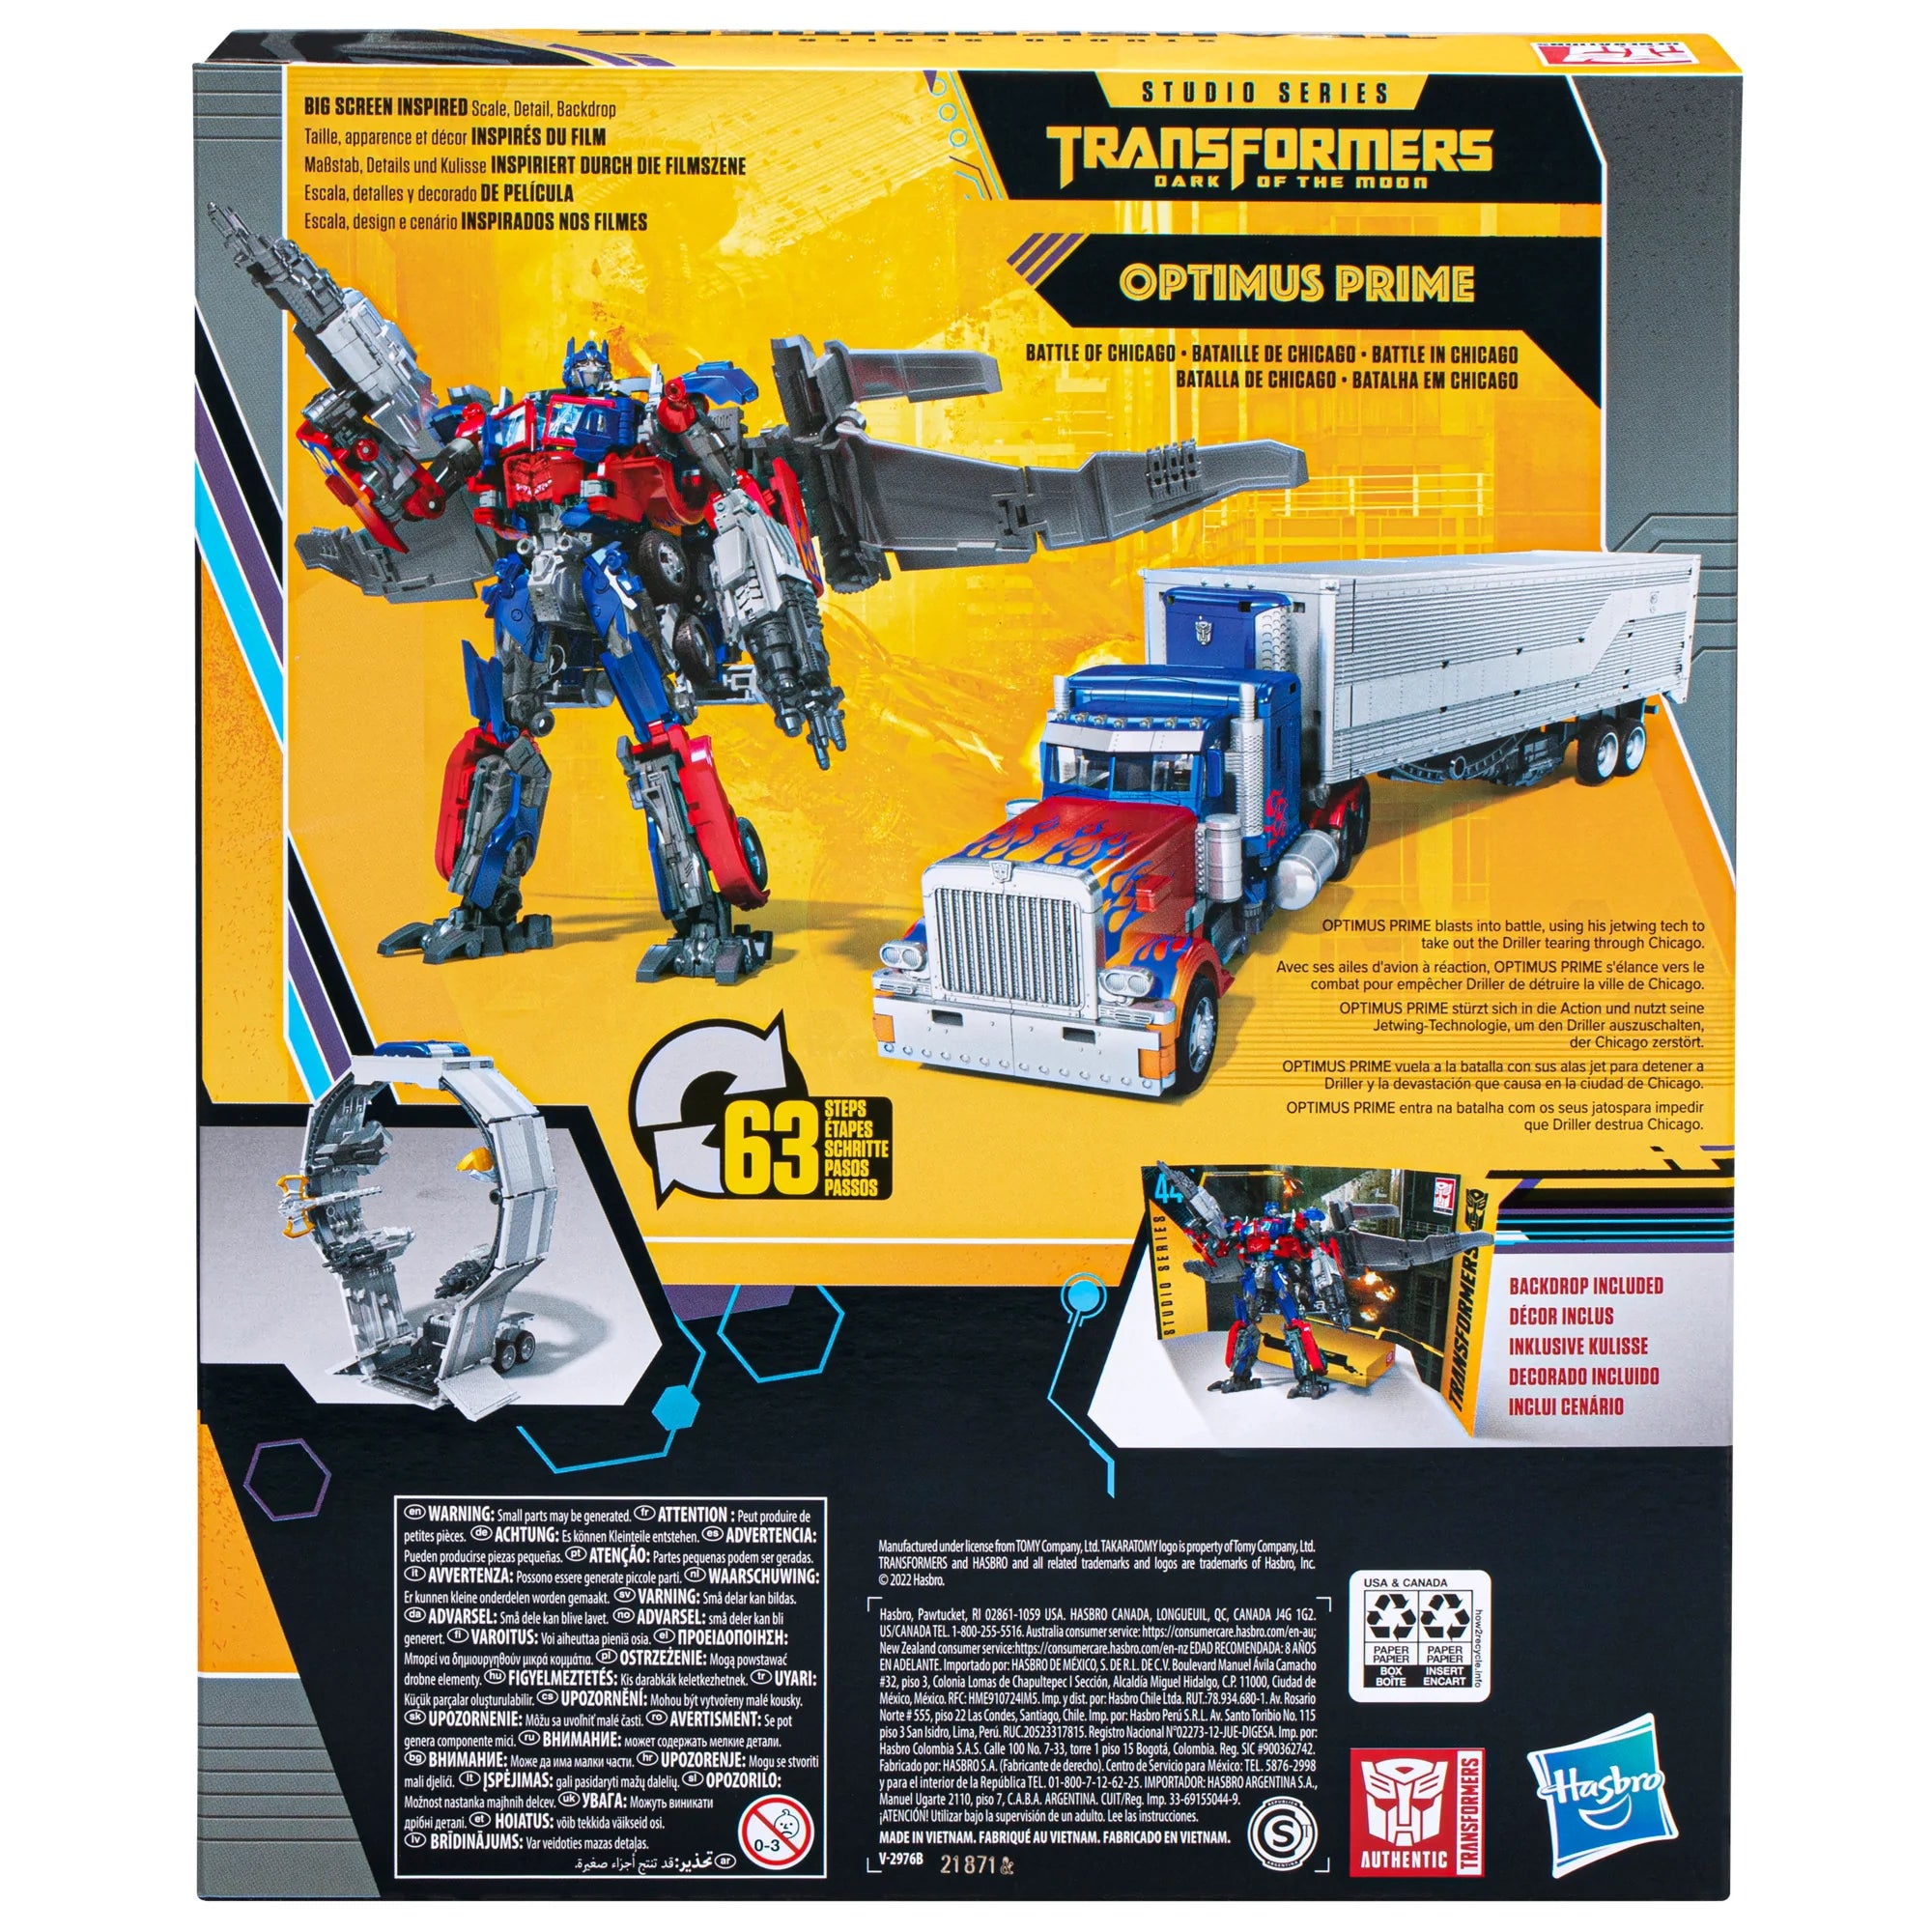 Hasbro - Transformers Generations Studio Series - Leader - Buzzworthy Bumblebee: Optimus Prime (Reissue) - Marvelous Toys